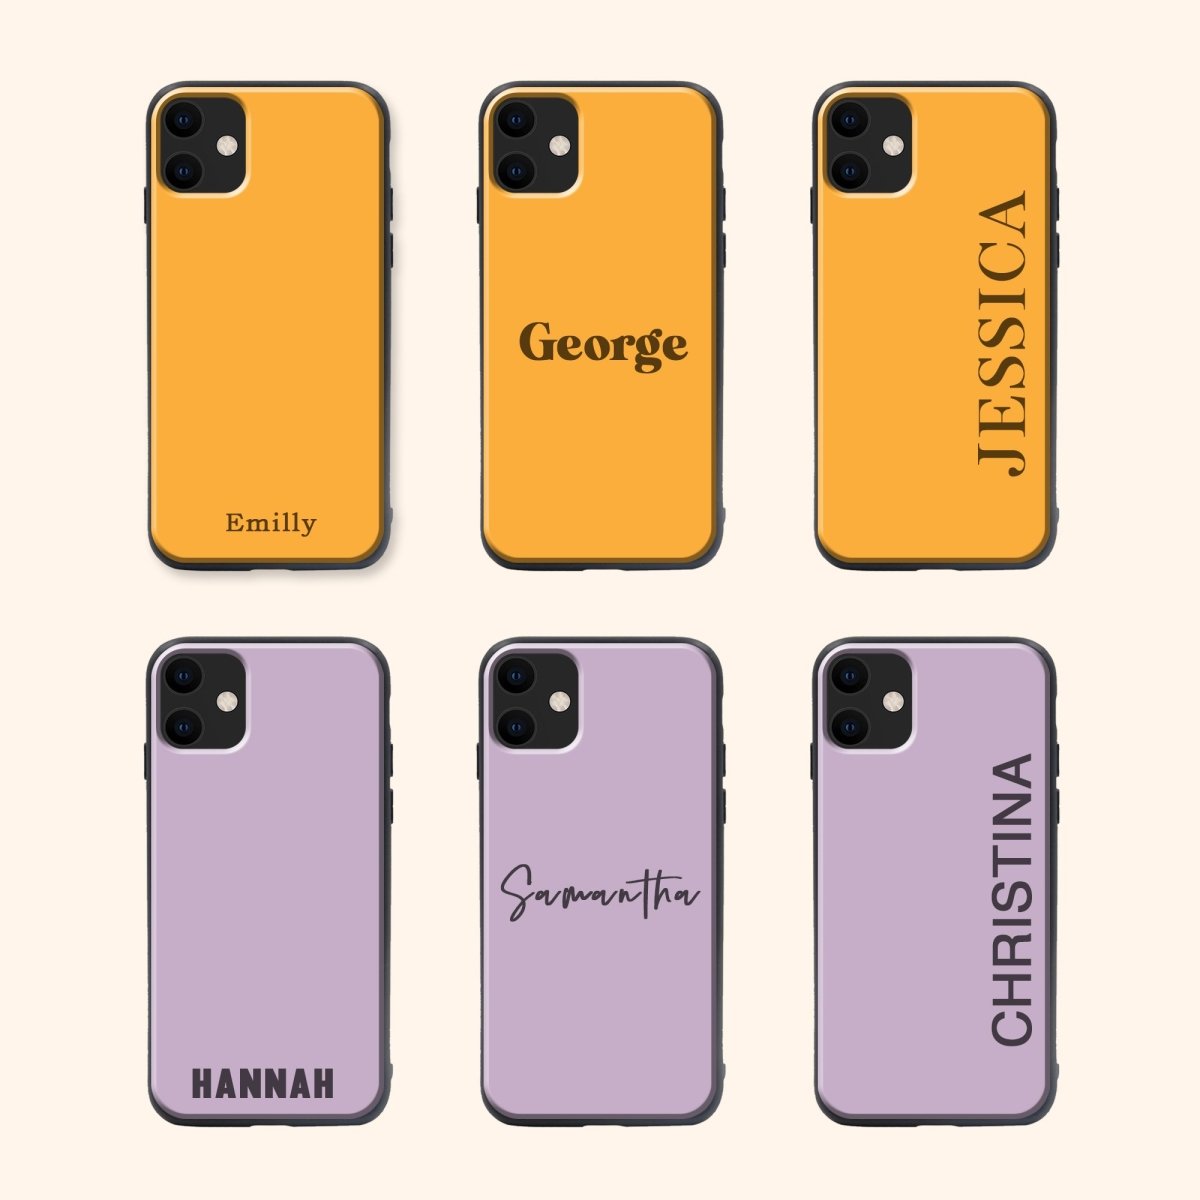 Orange Swirl - Glass Phone Case - cmzart